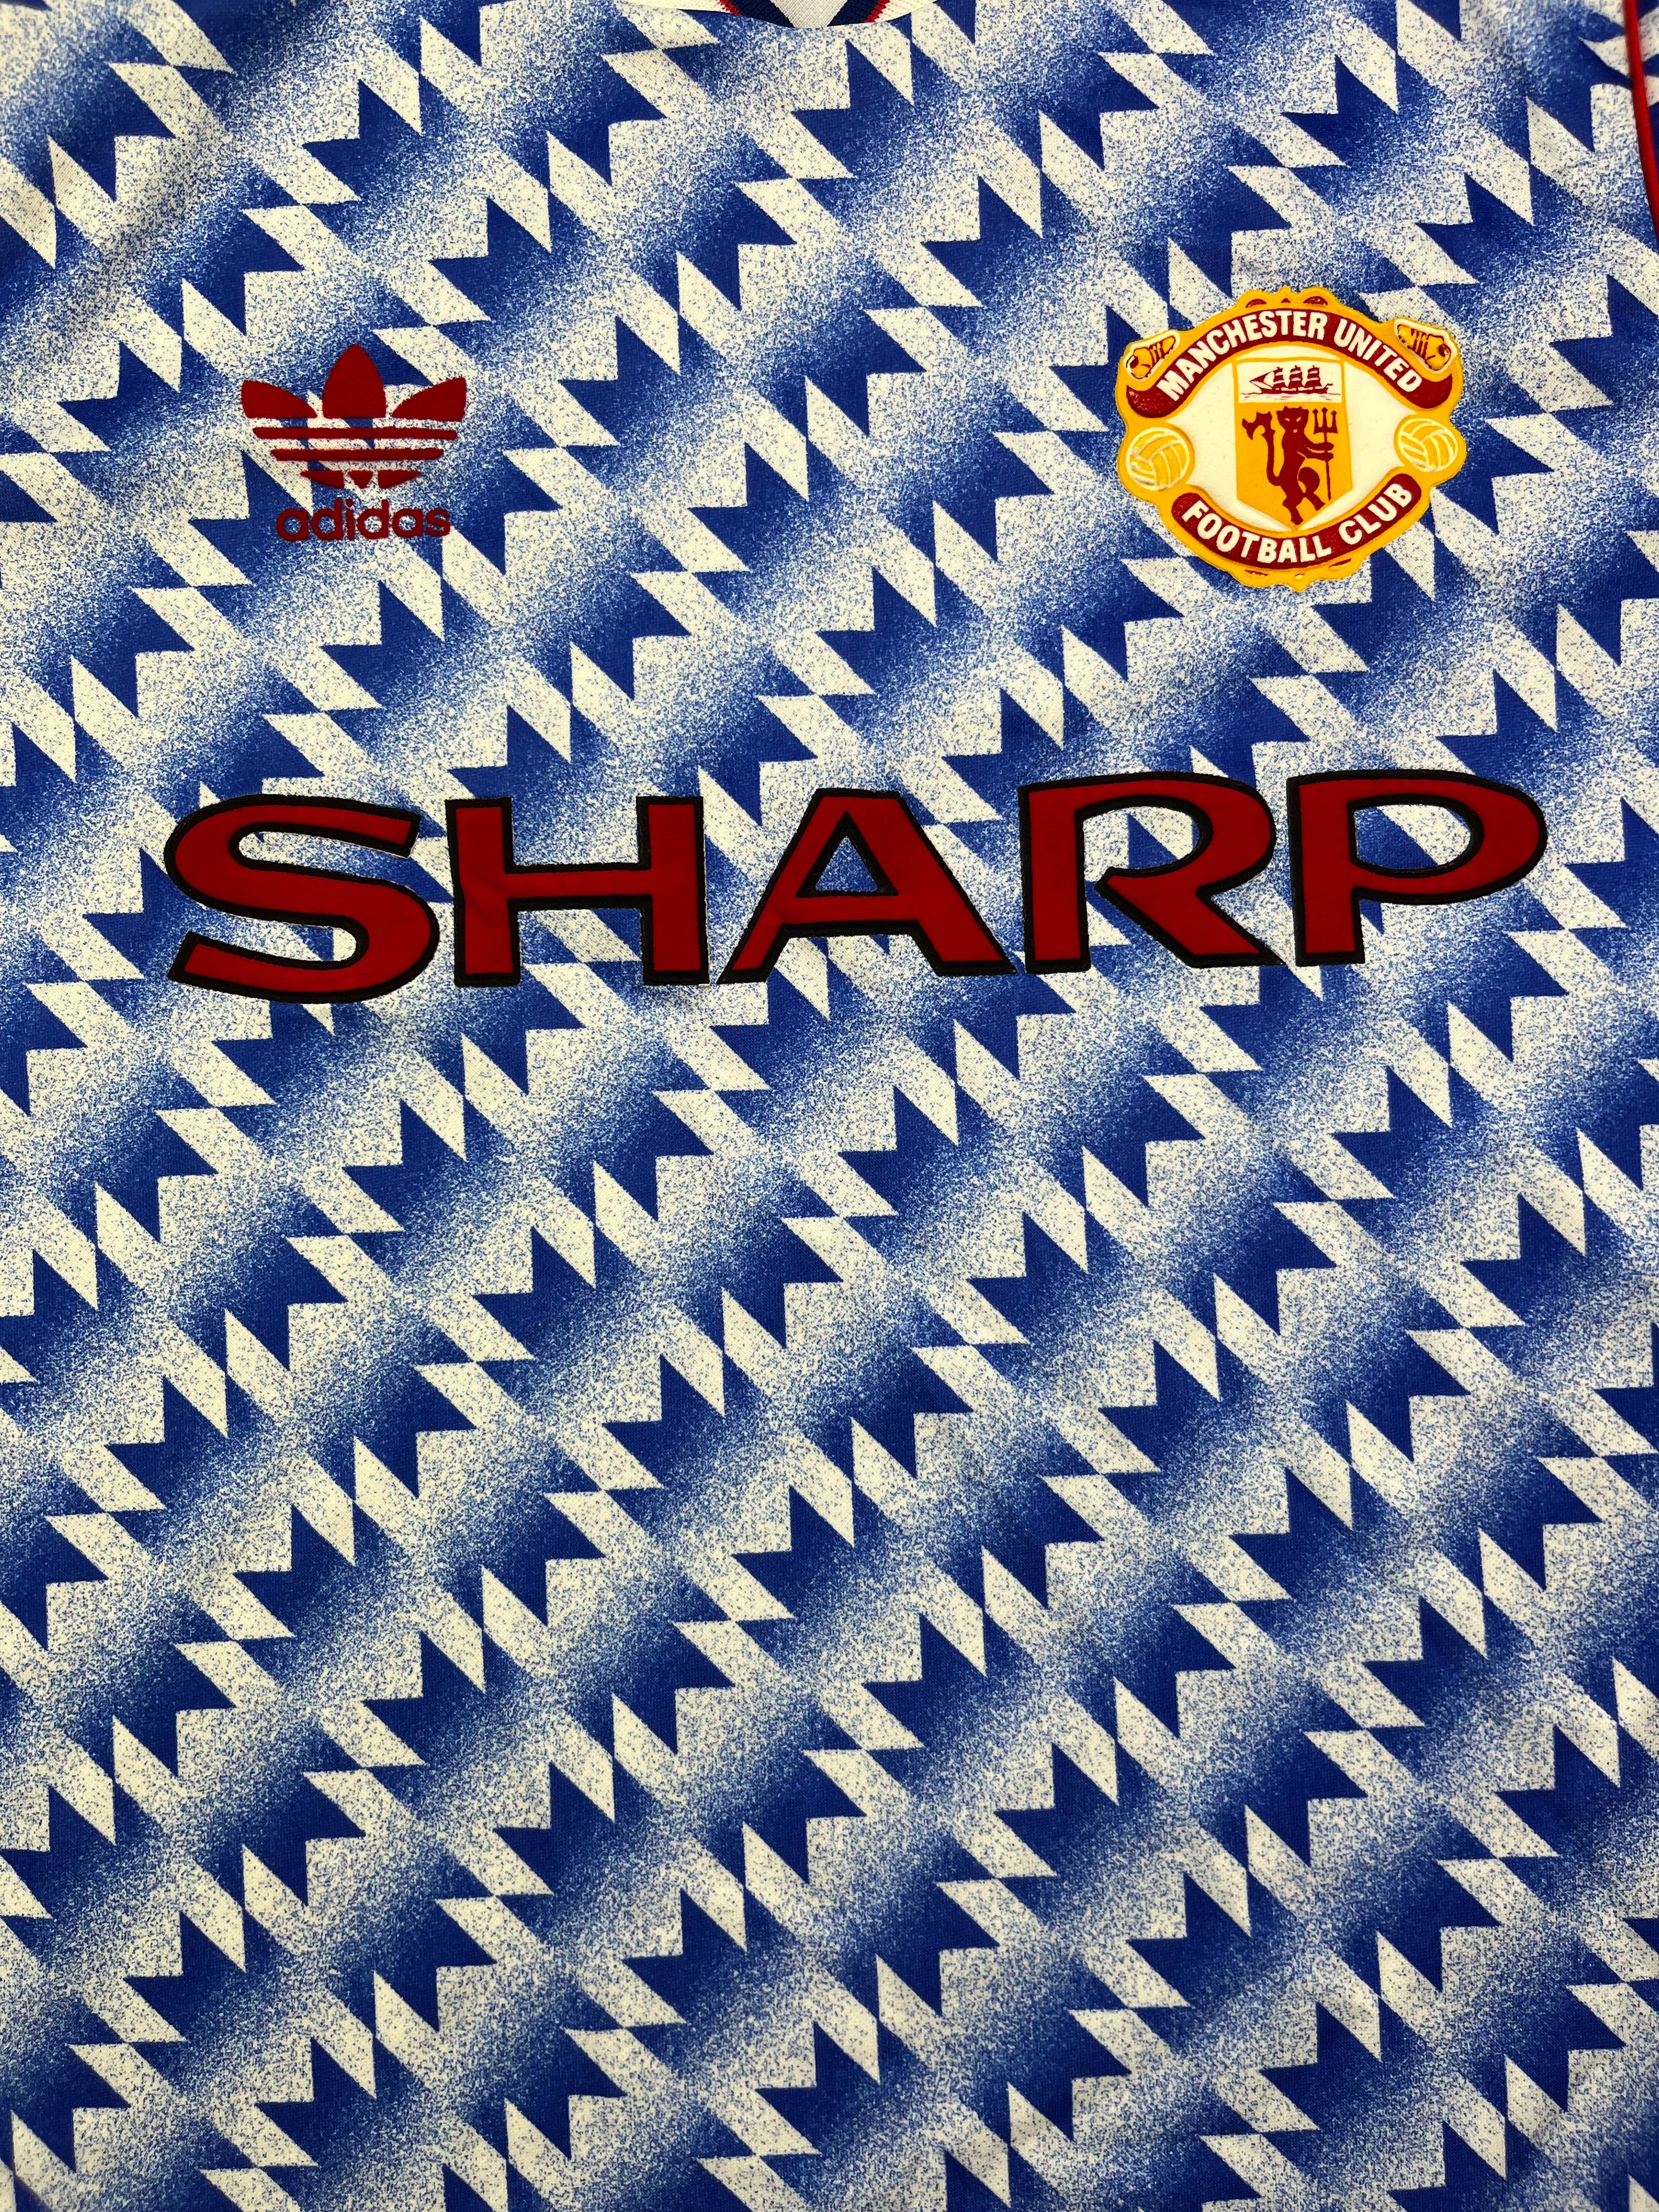 1990/92 Manchester United Away Shirt (S) 9.5/10